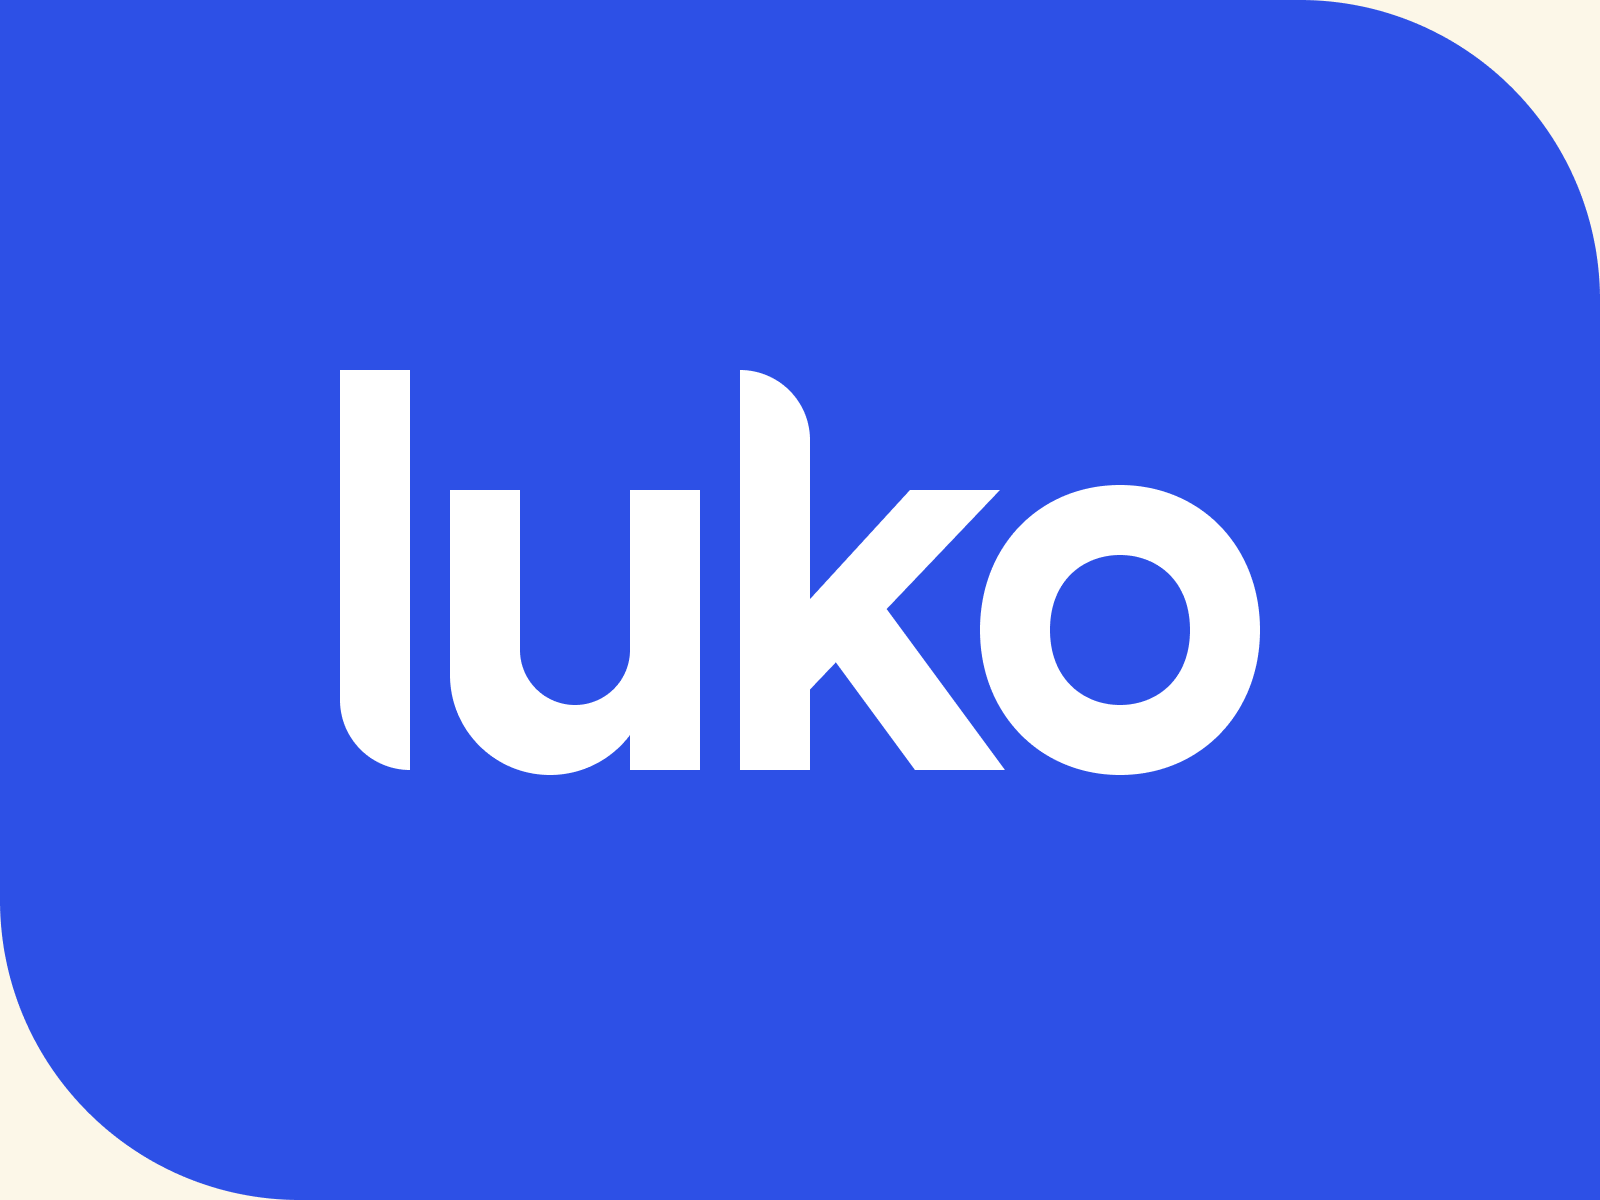 New Luko Logo - 2020 Rebranding by Quentin Morisseau for Luko on Dribbble